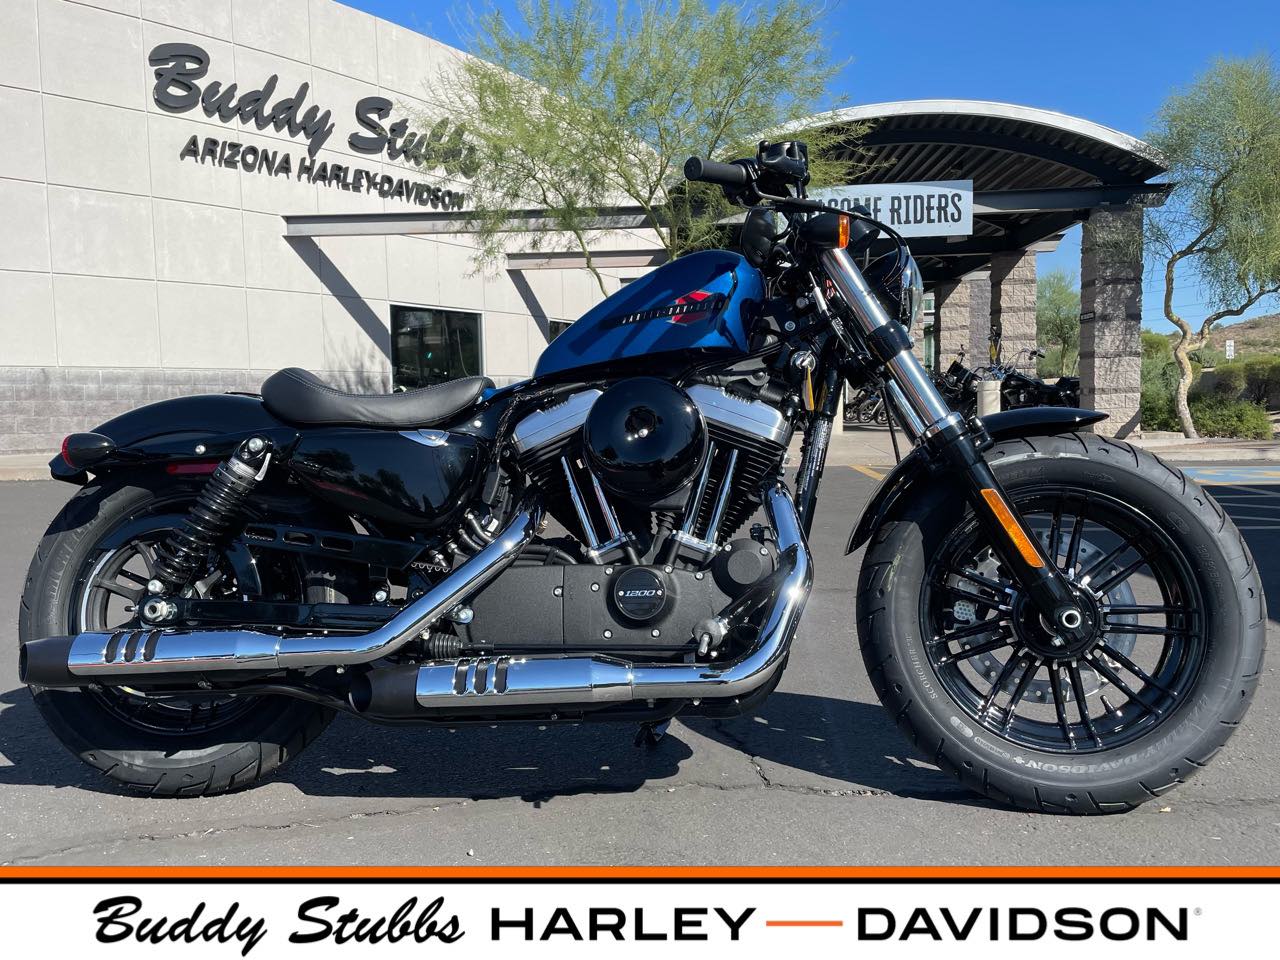 2022 Harley-Davidson Sportster Forty-Eight at Buddy Stubbs Arizona Harley-Davidson